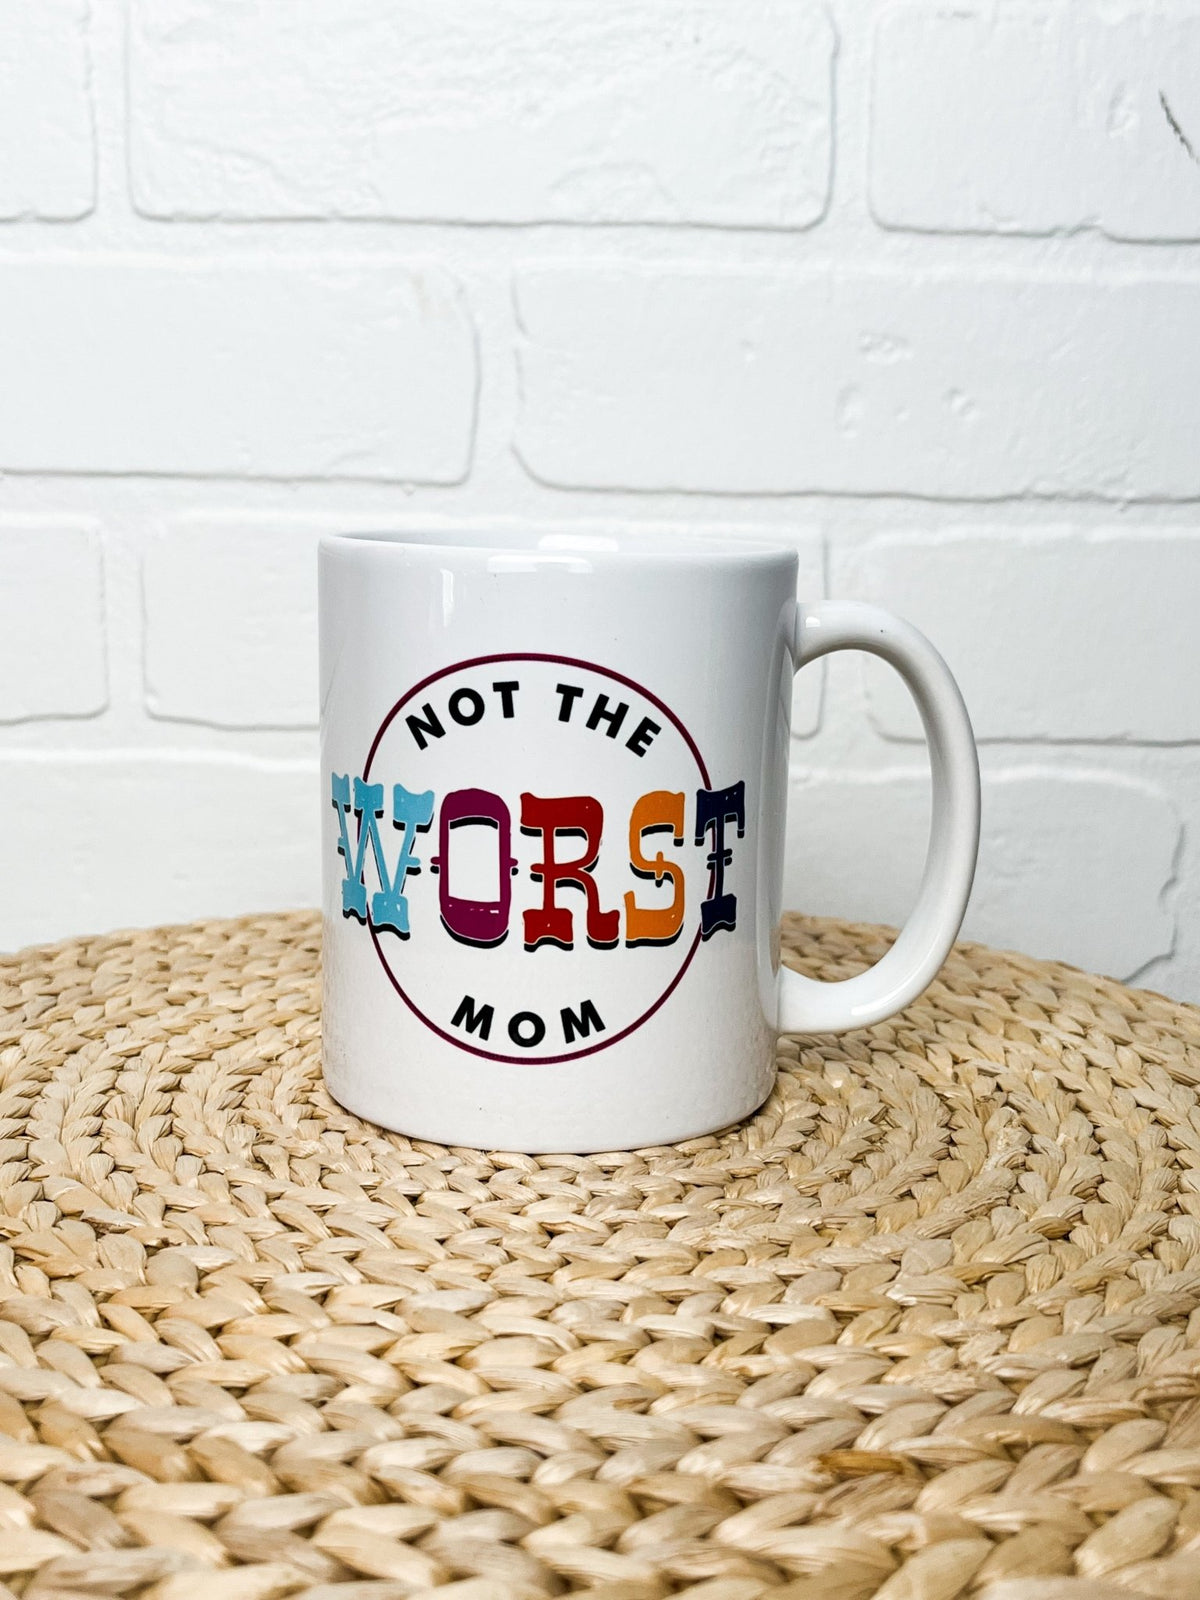 Mugsby not the worst mom coffee mug - Stylish coffee mug - Trendy Gifts for Mom at Lush Fashion Lounge in Oklahoma